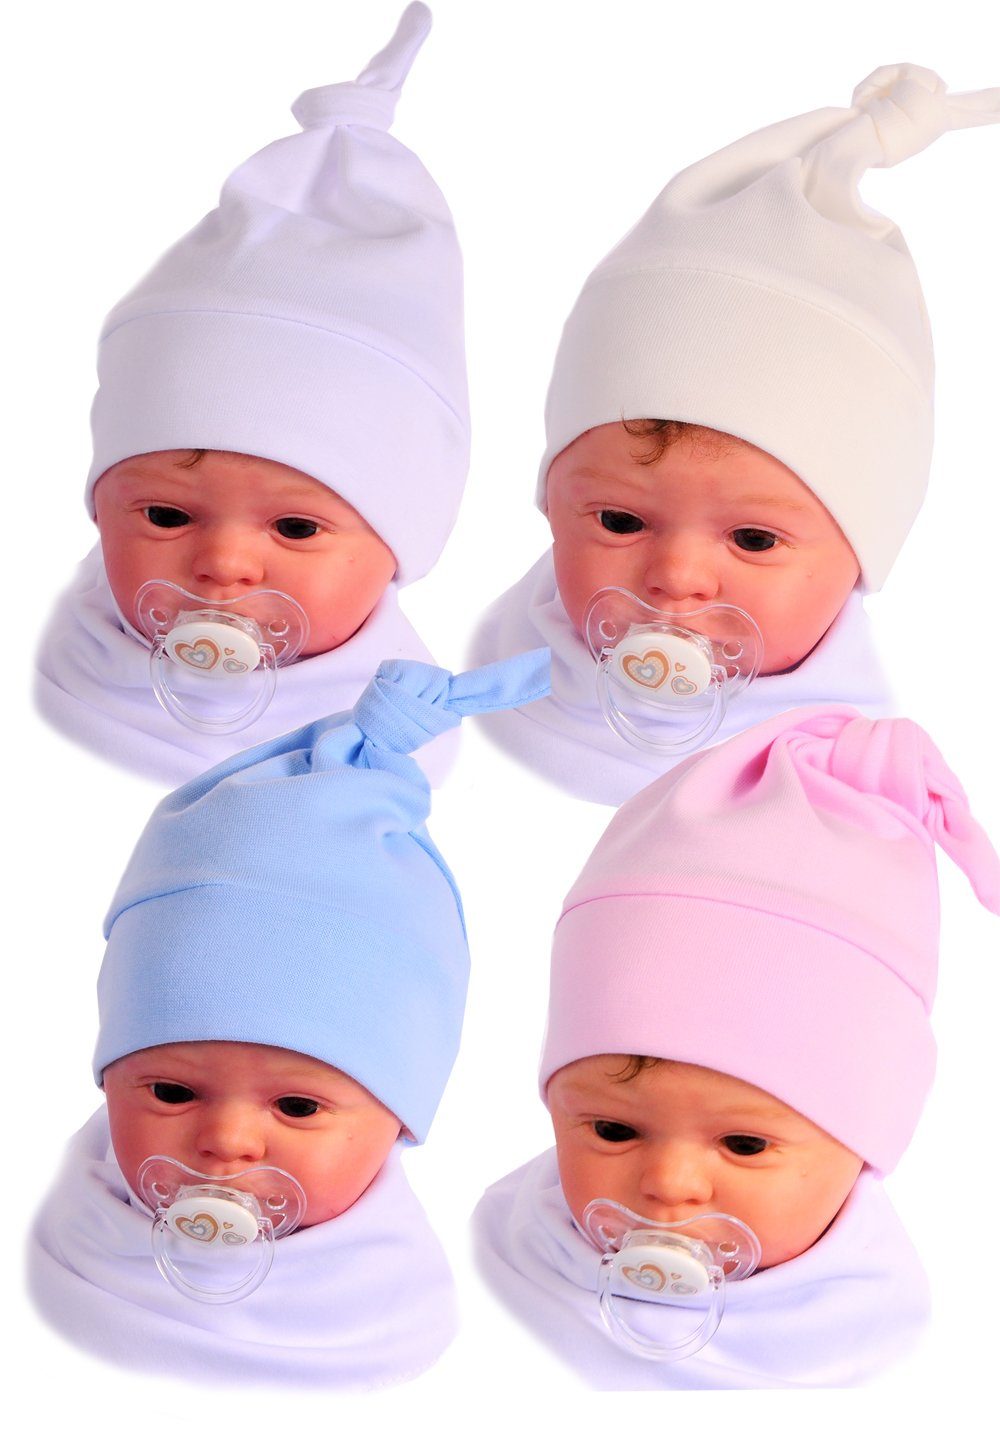 La Bortini Erstlingsmütze für Blau Mütze Neugeborene Knotenmütze Baby Mützchen Baby